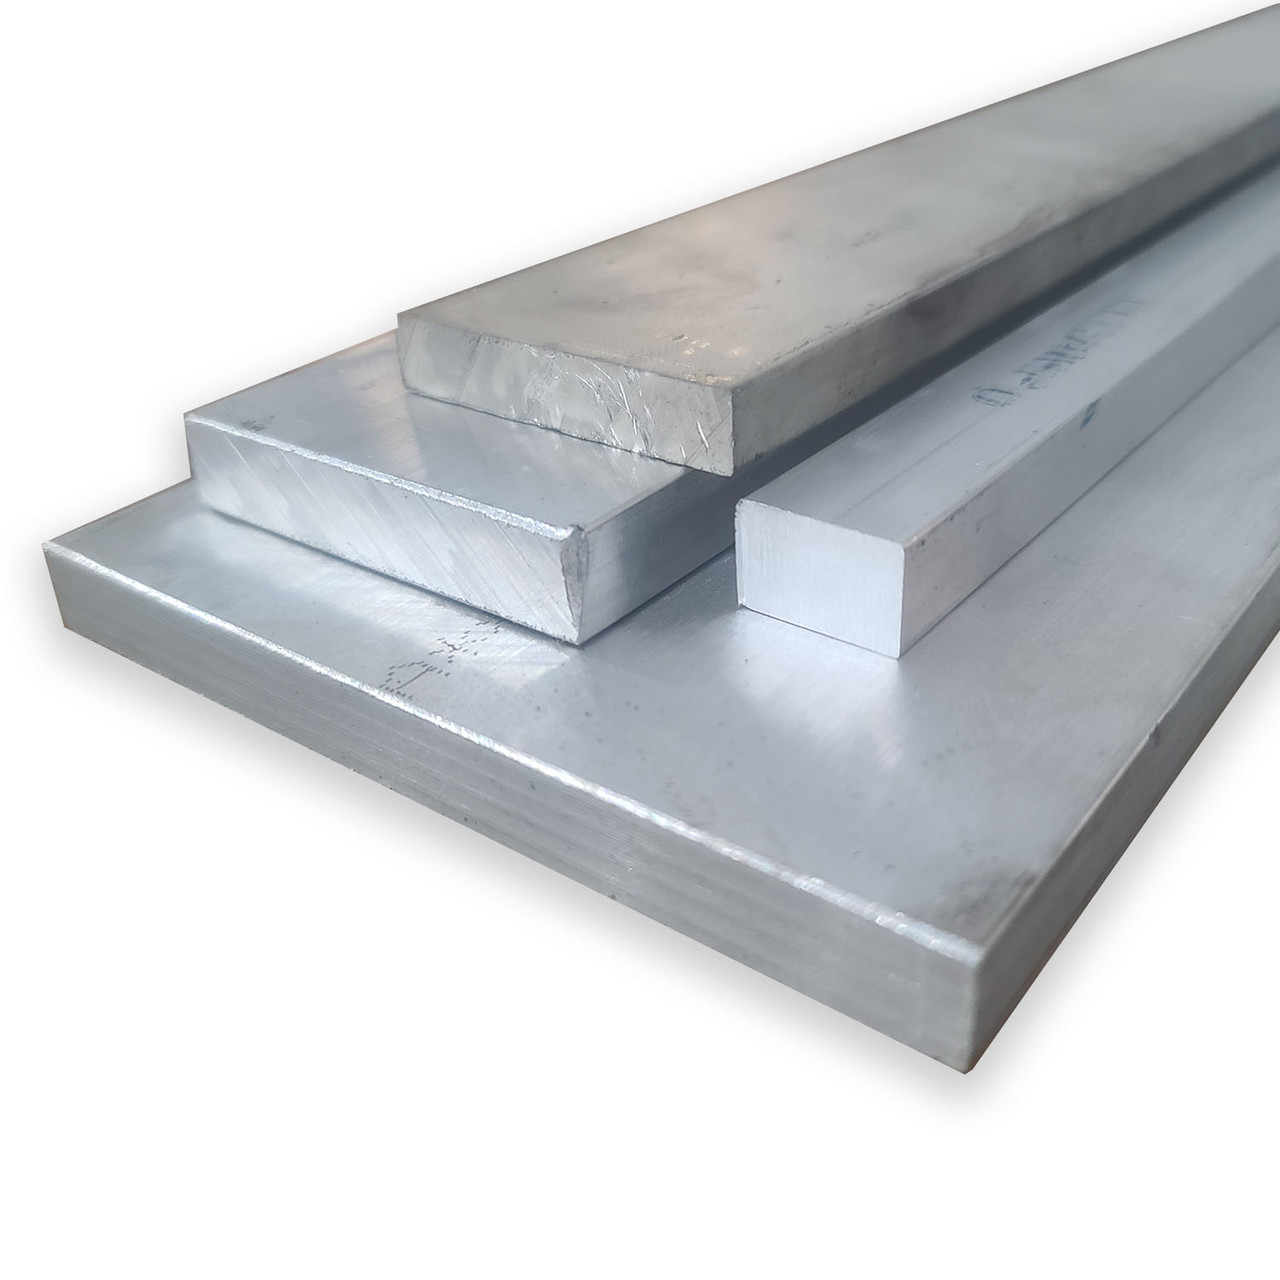 0.250" x 1" x 60", 6061-T6511 Aluminum Flat Bar